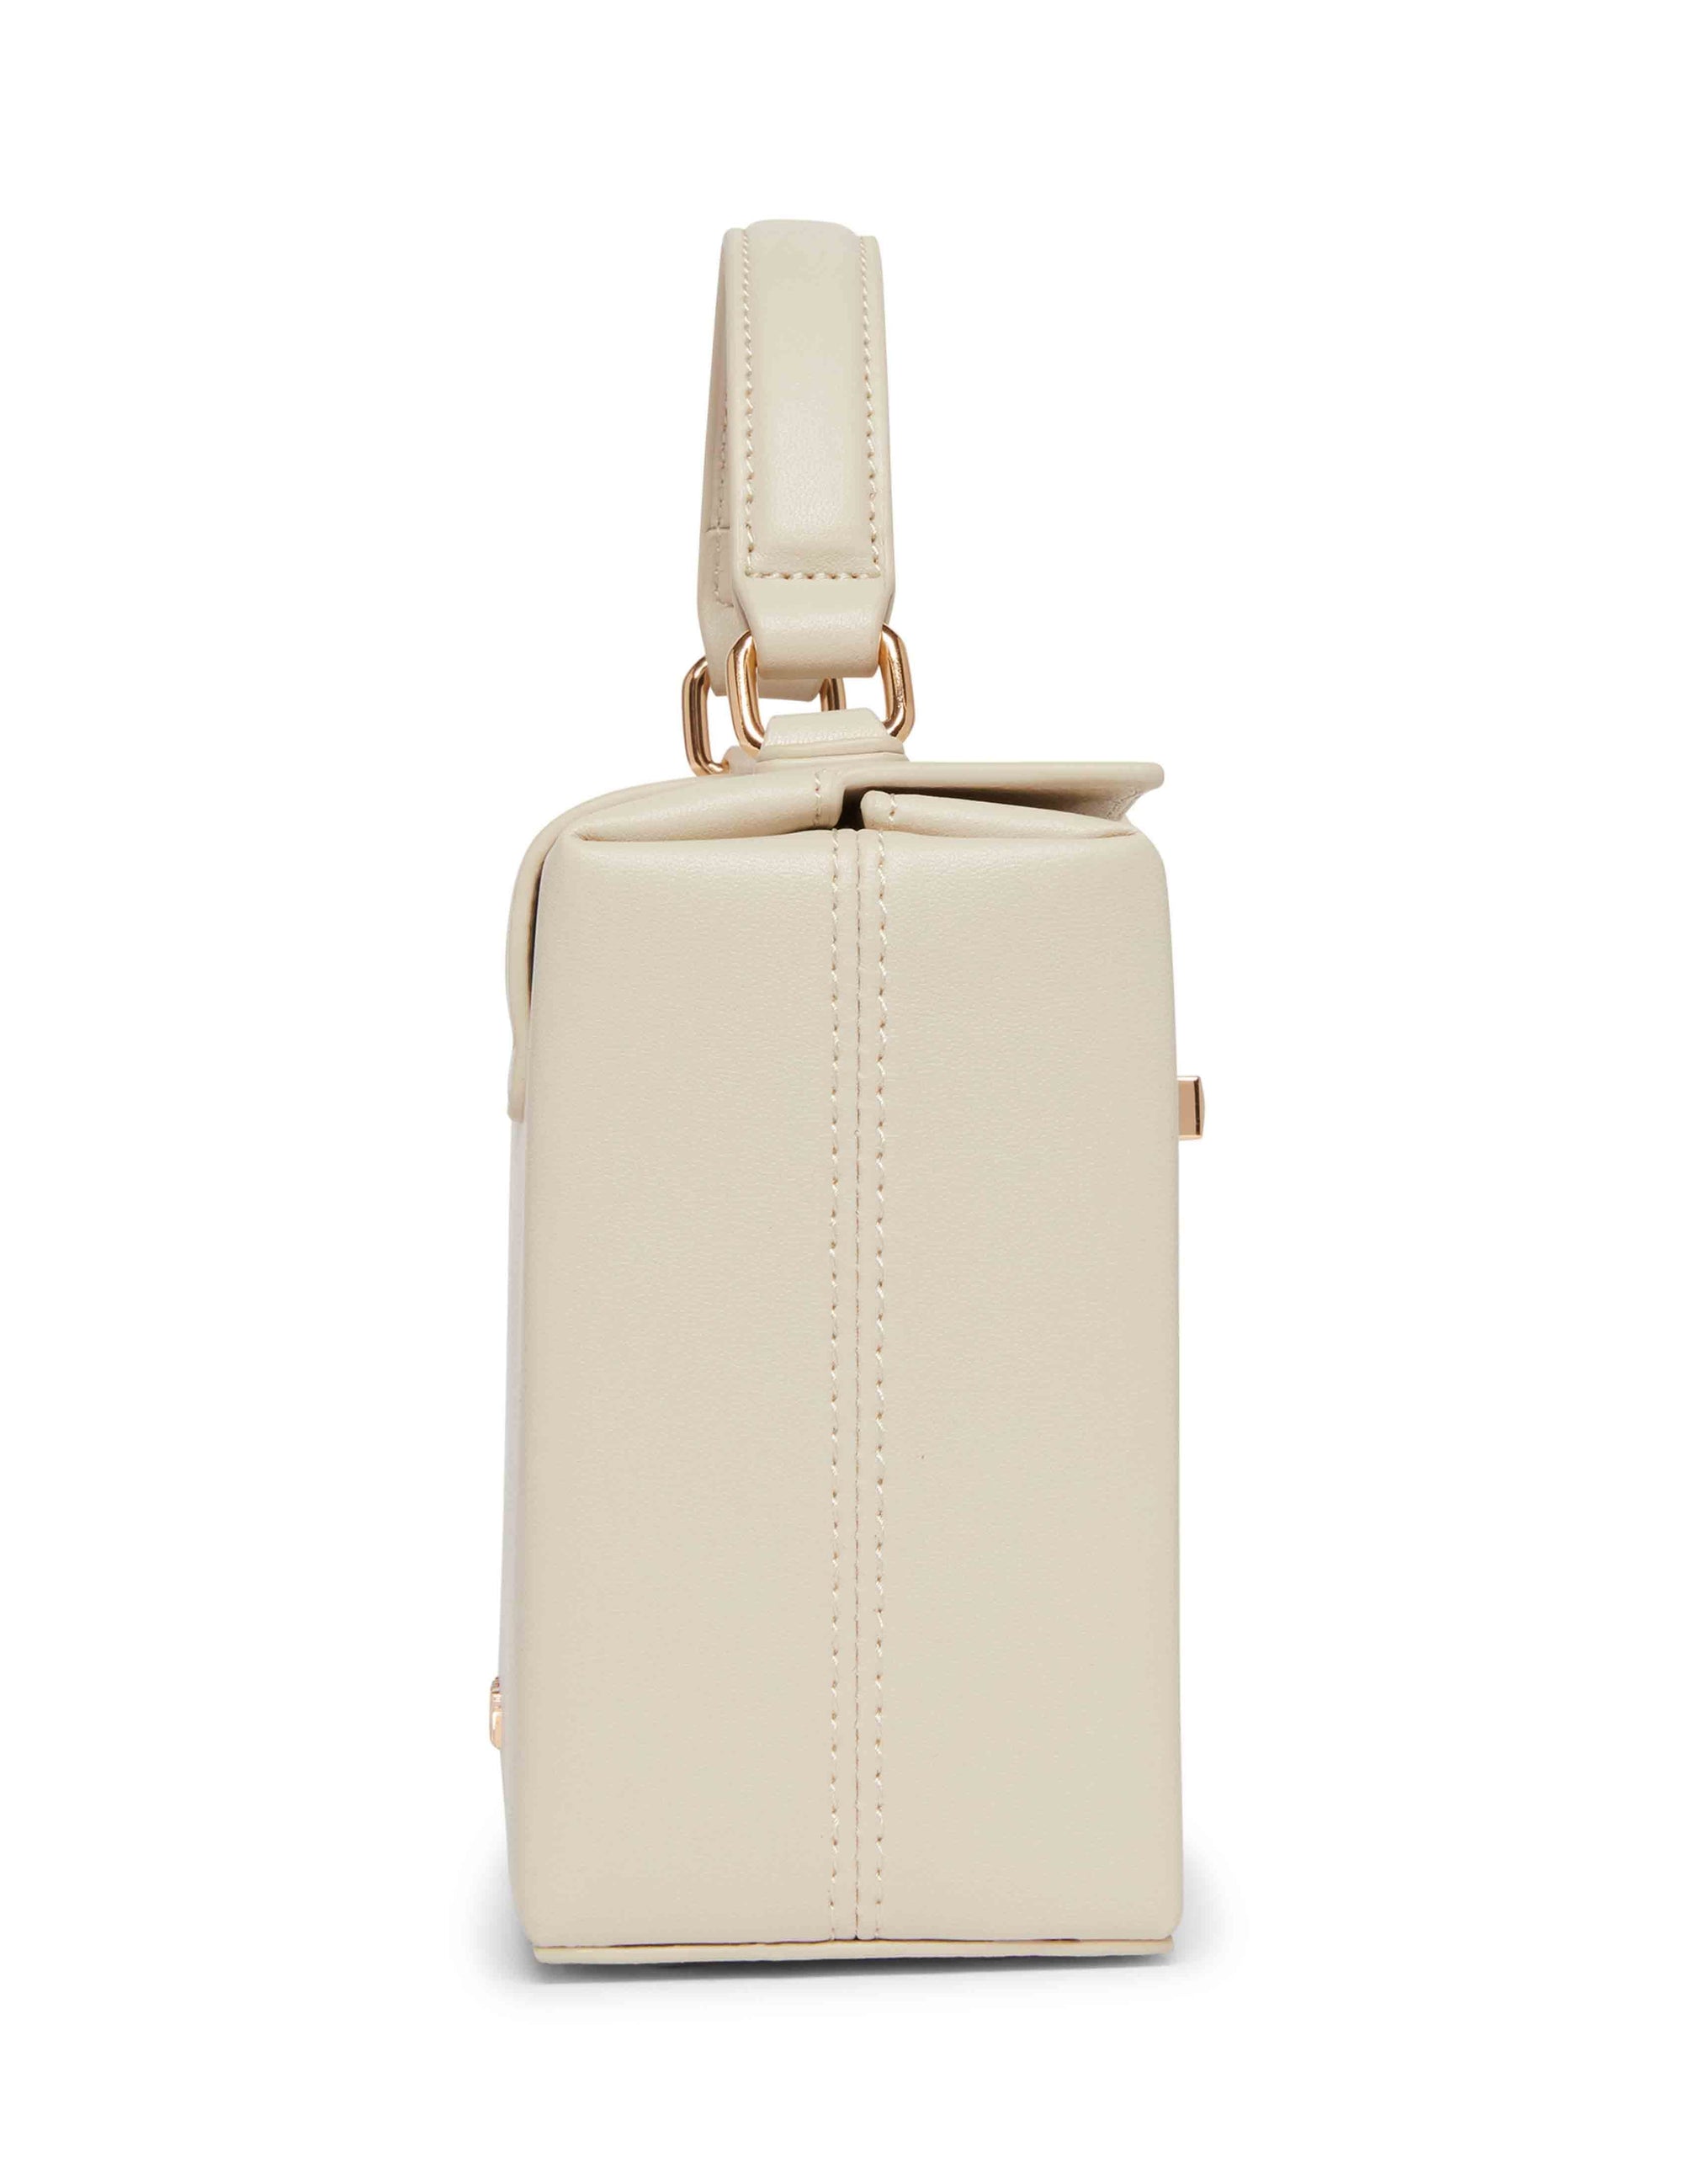 Calvin Klein Beige Handbags